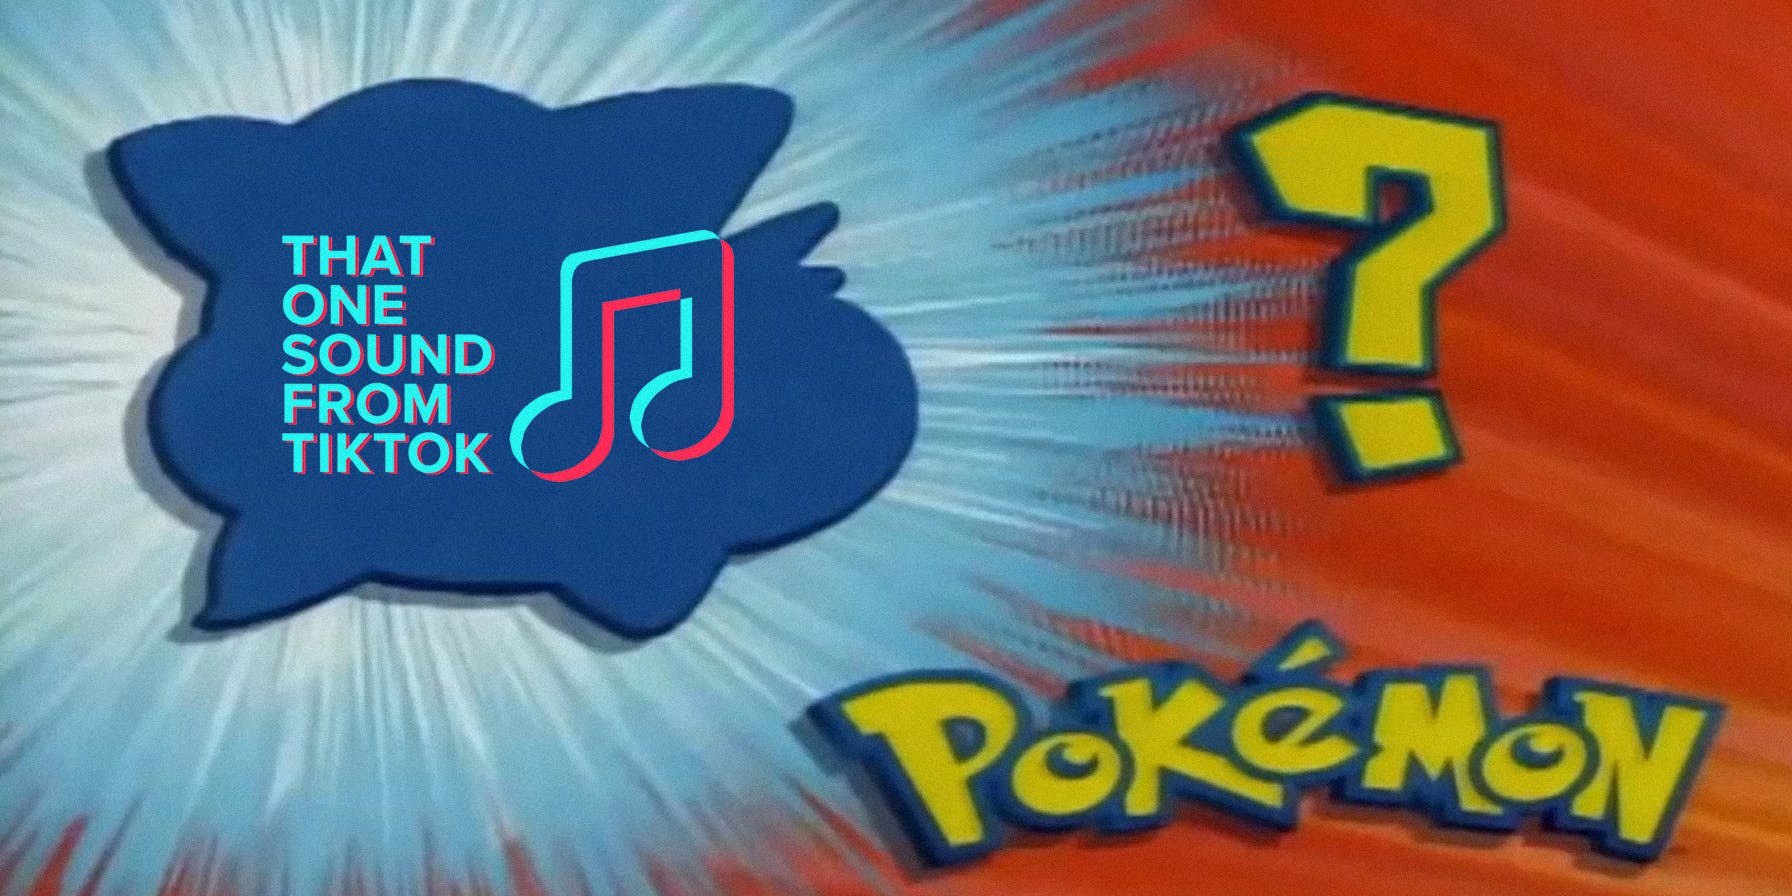 pokemon reveal screen with "That one sound from tiktok" logo